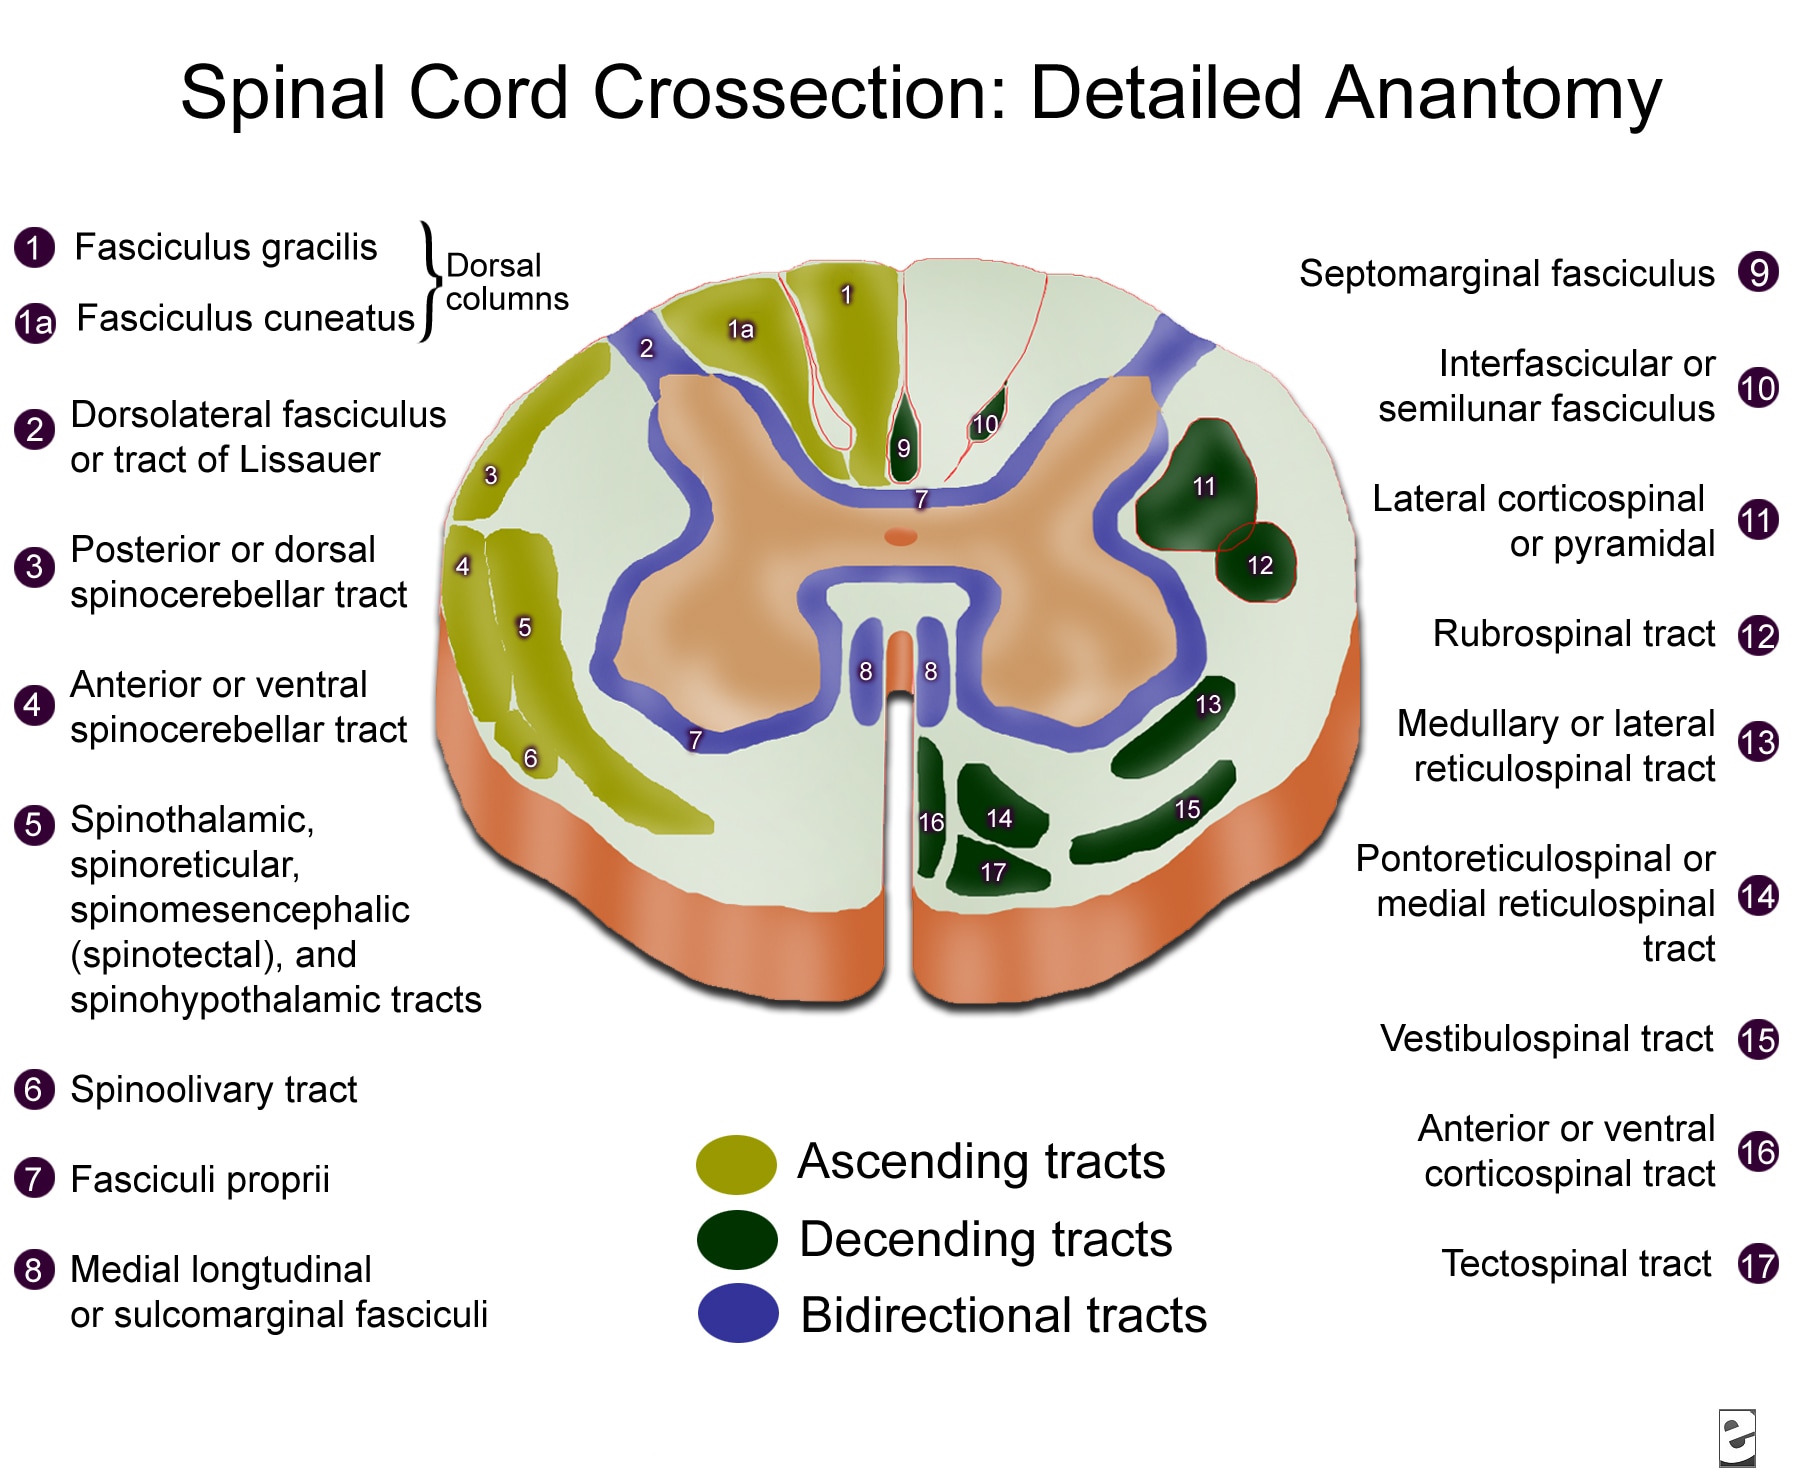 Spinal Cord Cross sectional Anatomy rdiOlogY dE aruN